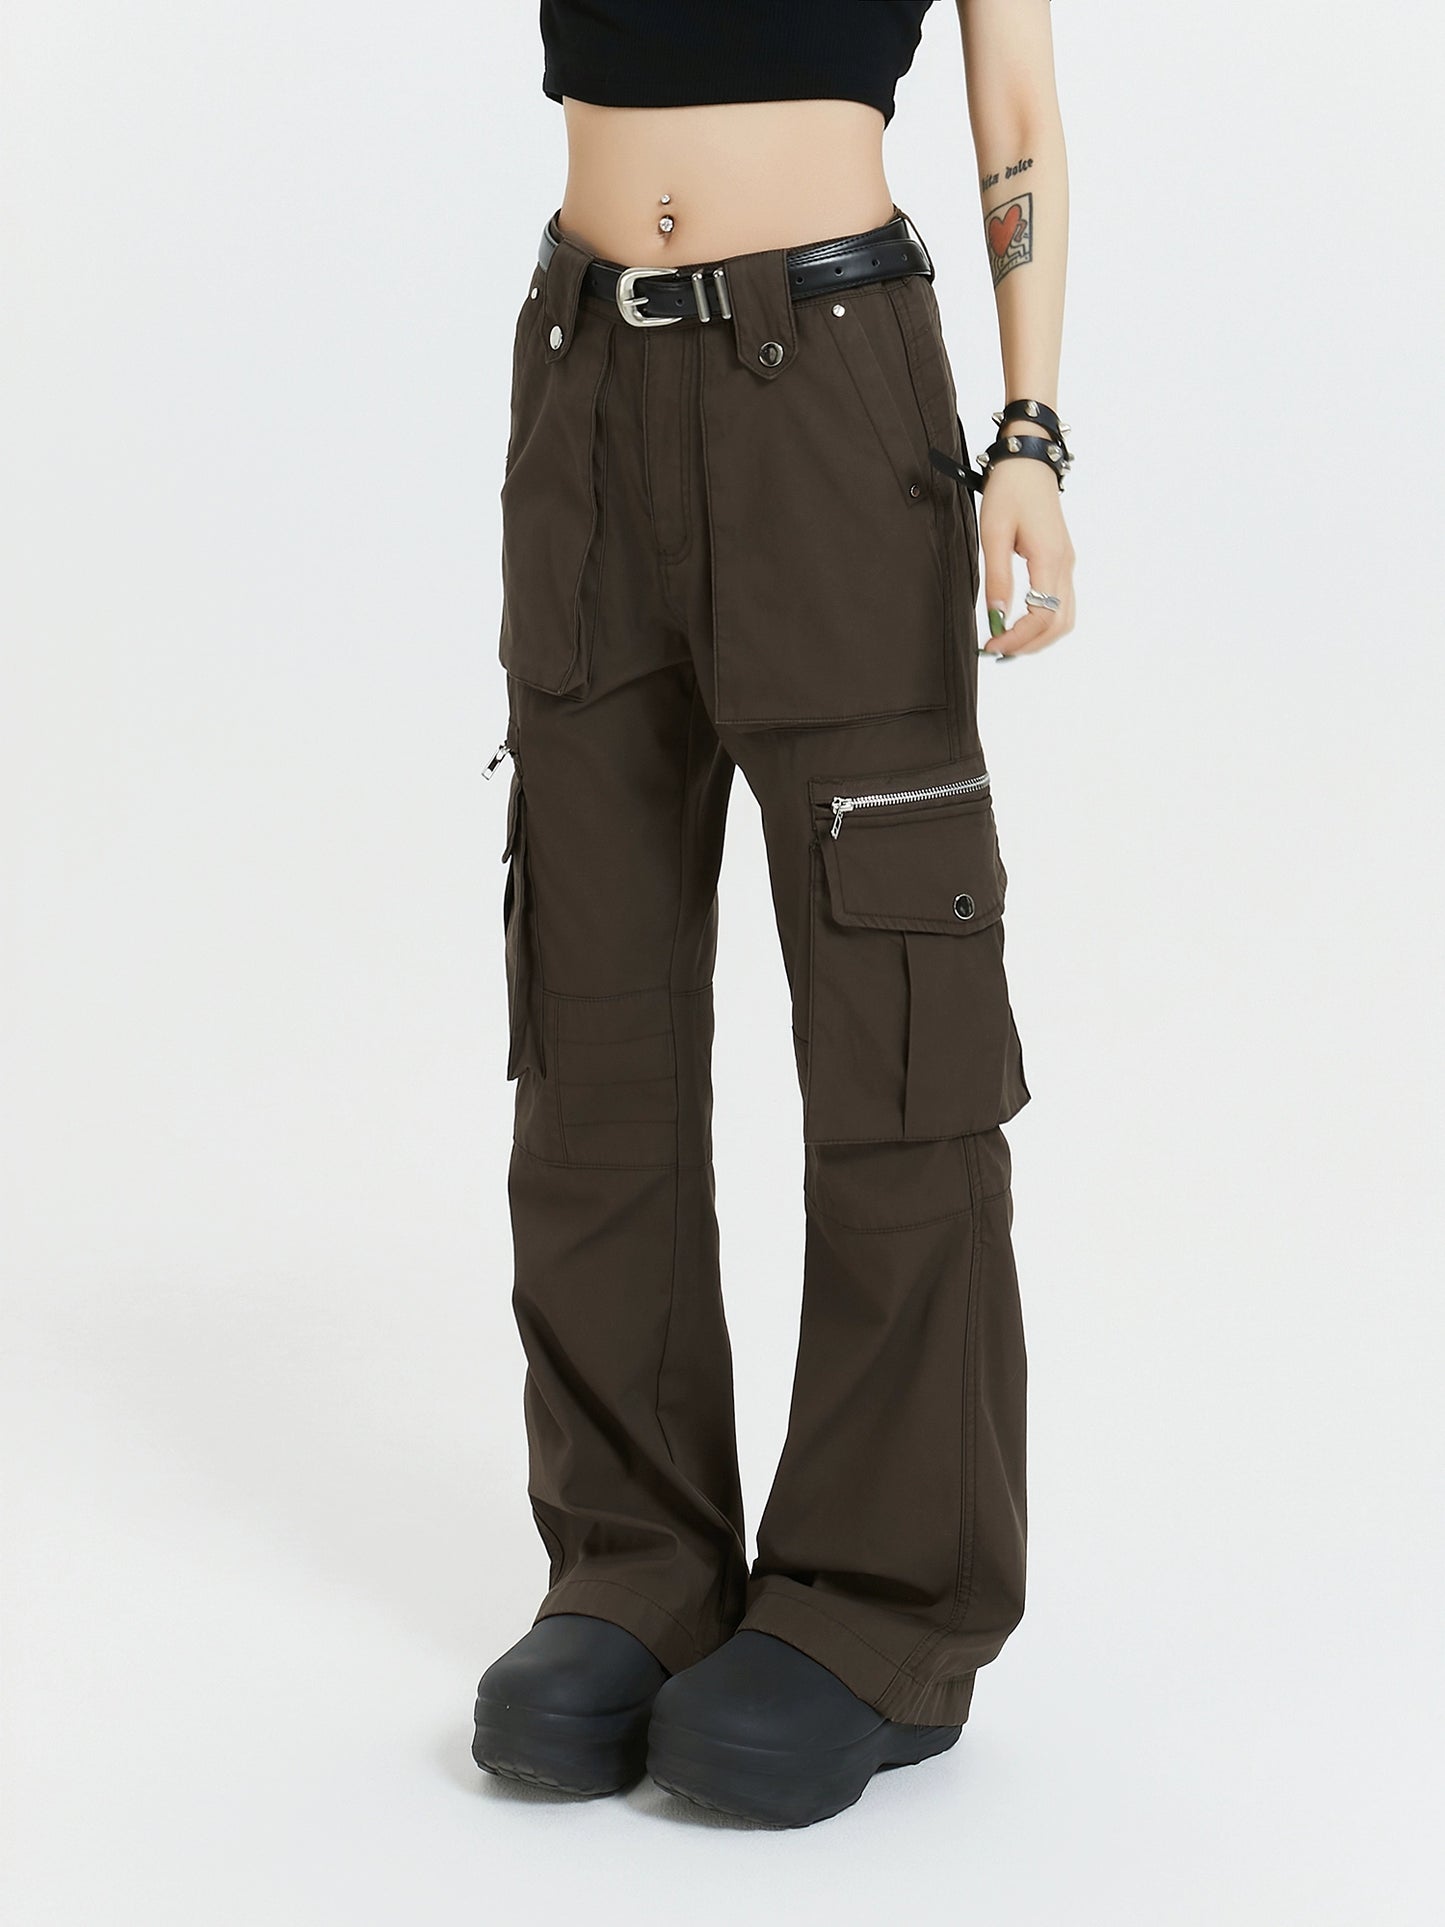 MICHINNYON American Retro Functional Multi-Pocket Cargo Pants Niche High Street Design Casual Pants For Men & Women